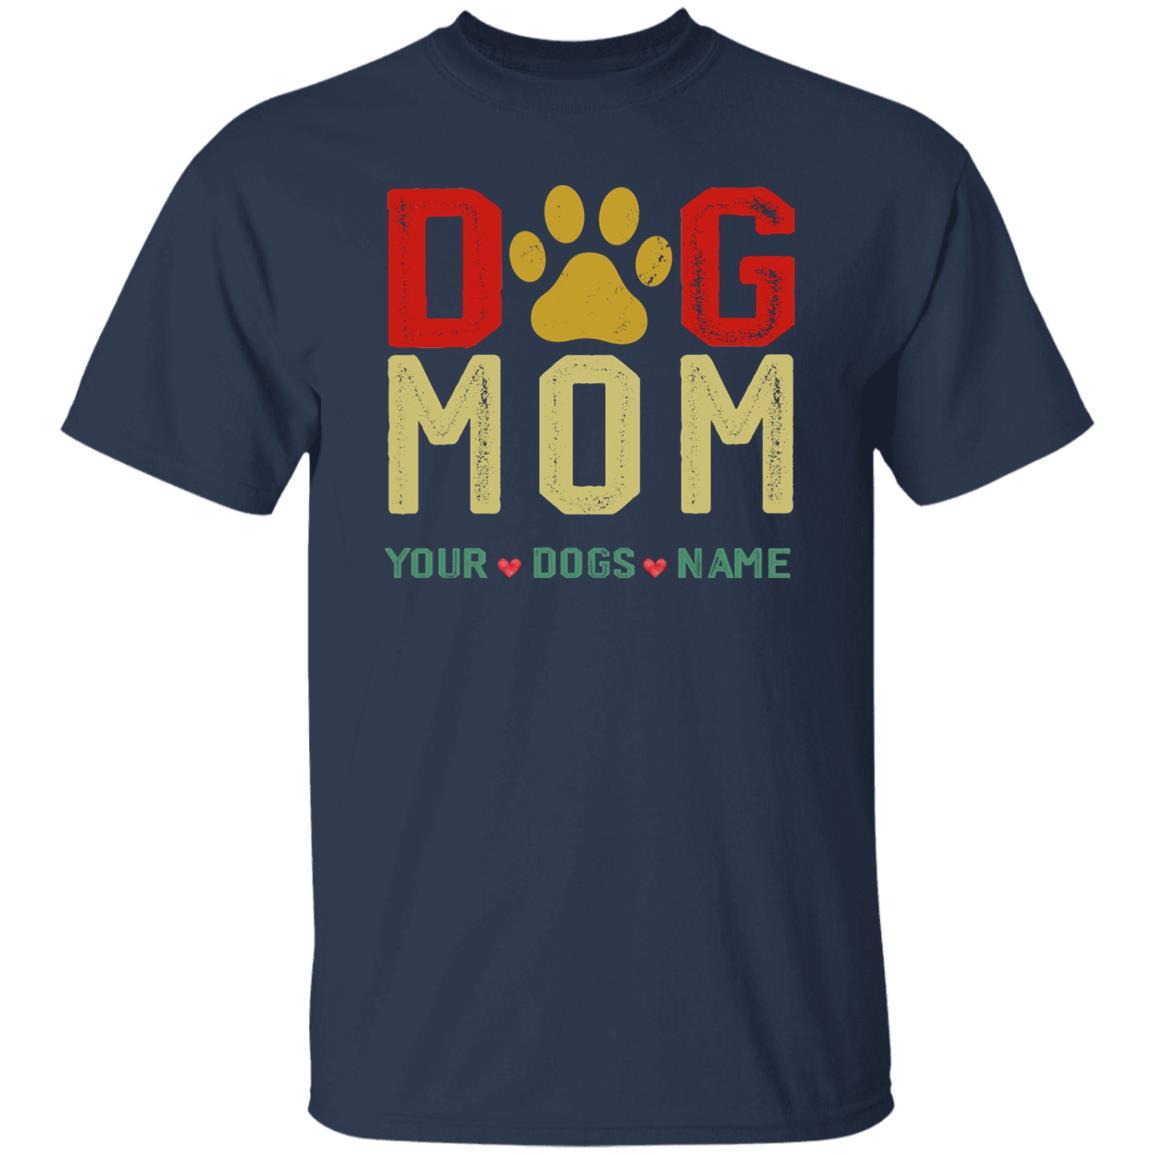 Customized Dog Mom Shirt with Dog Names Gift